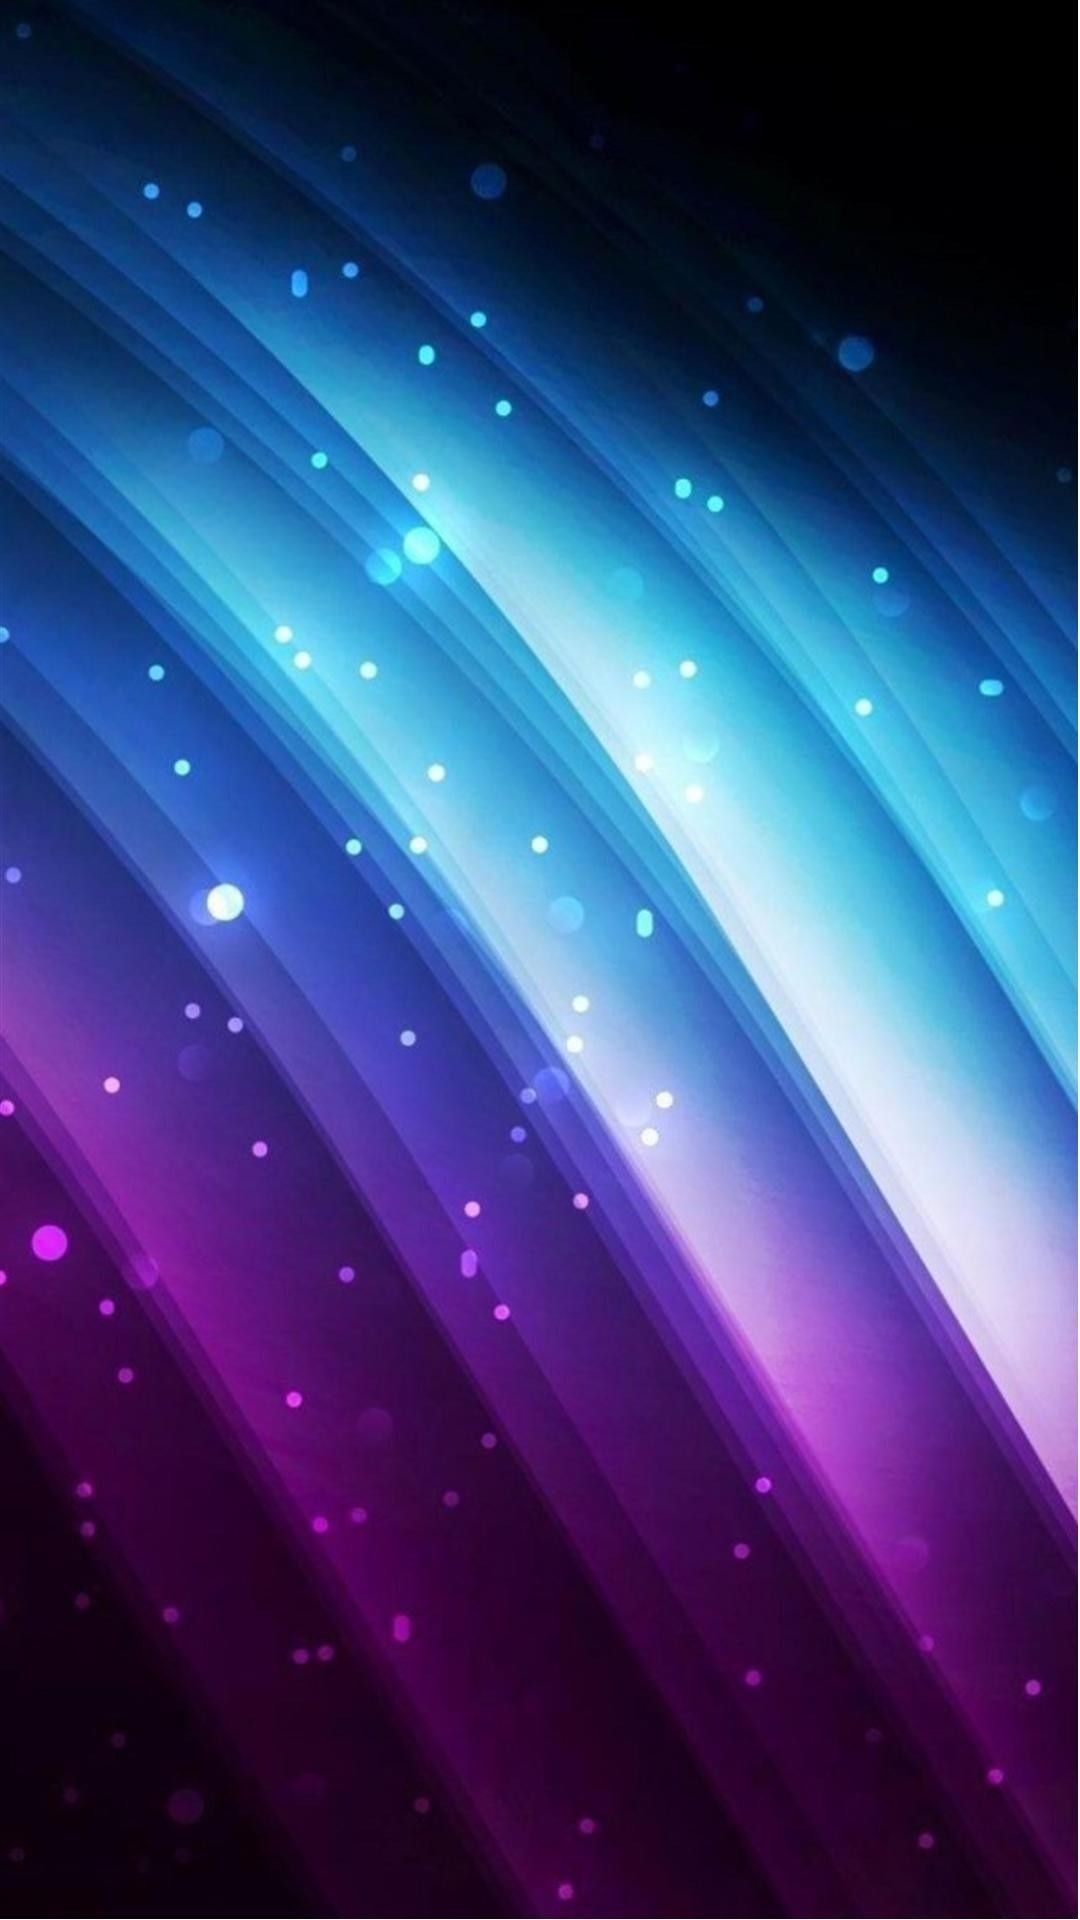 fondos de pantalla y temas del teléfono,azul,violeta,púrpura,ligero,cielo